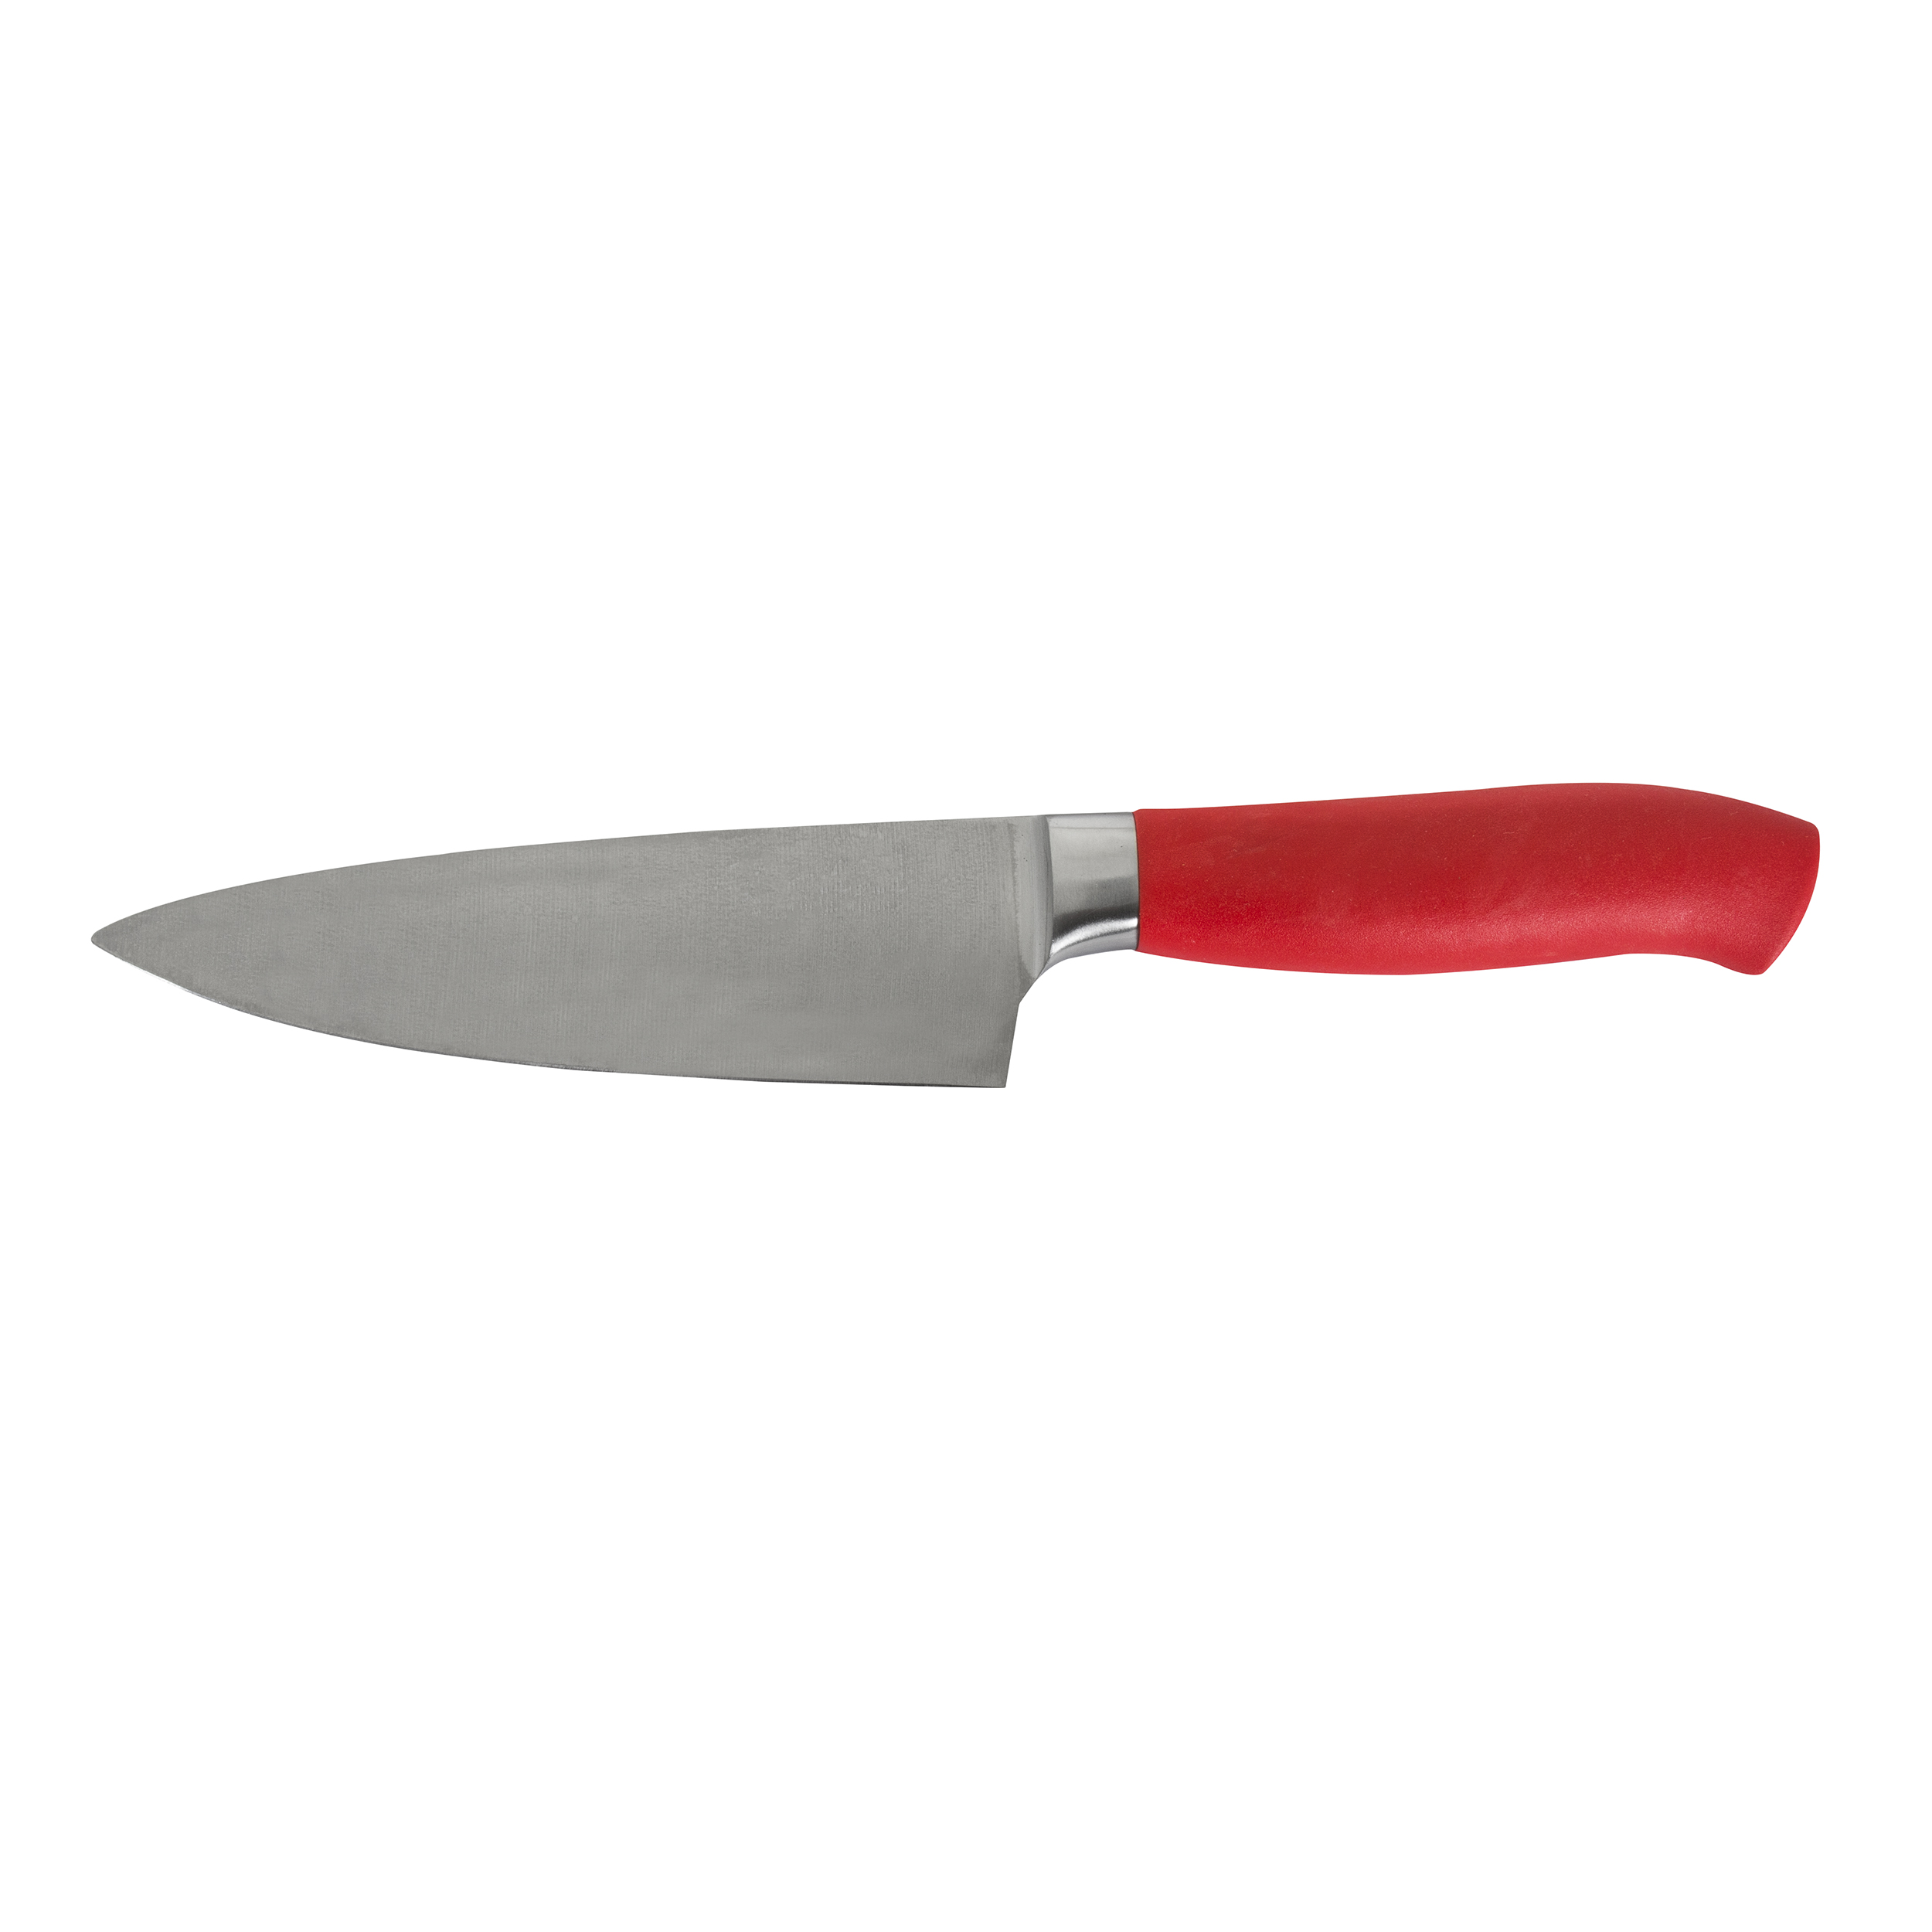 چاقو اشپزخانه مدل Maxpro5